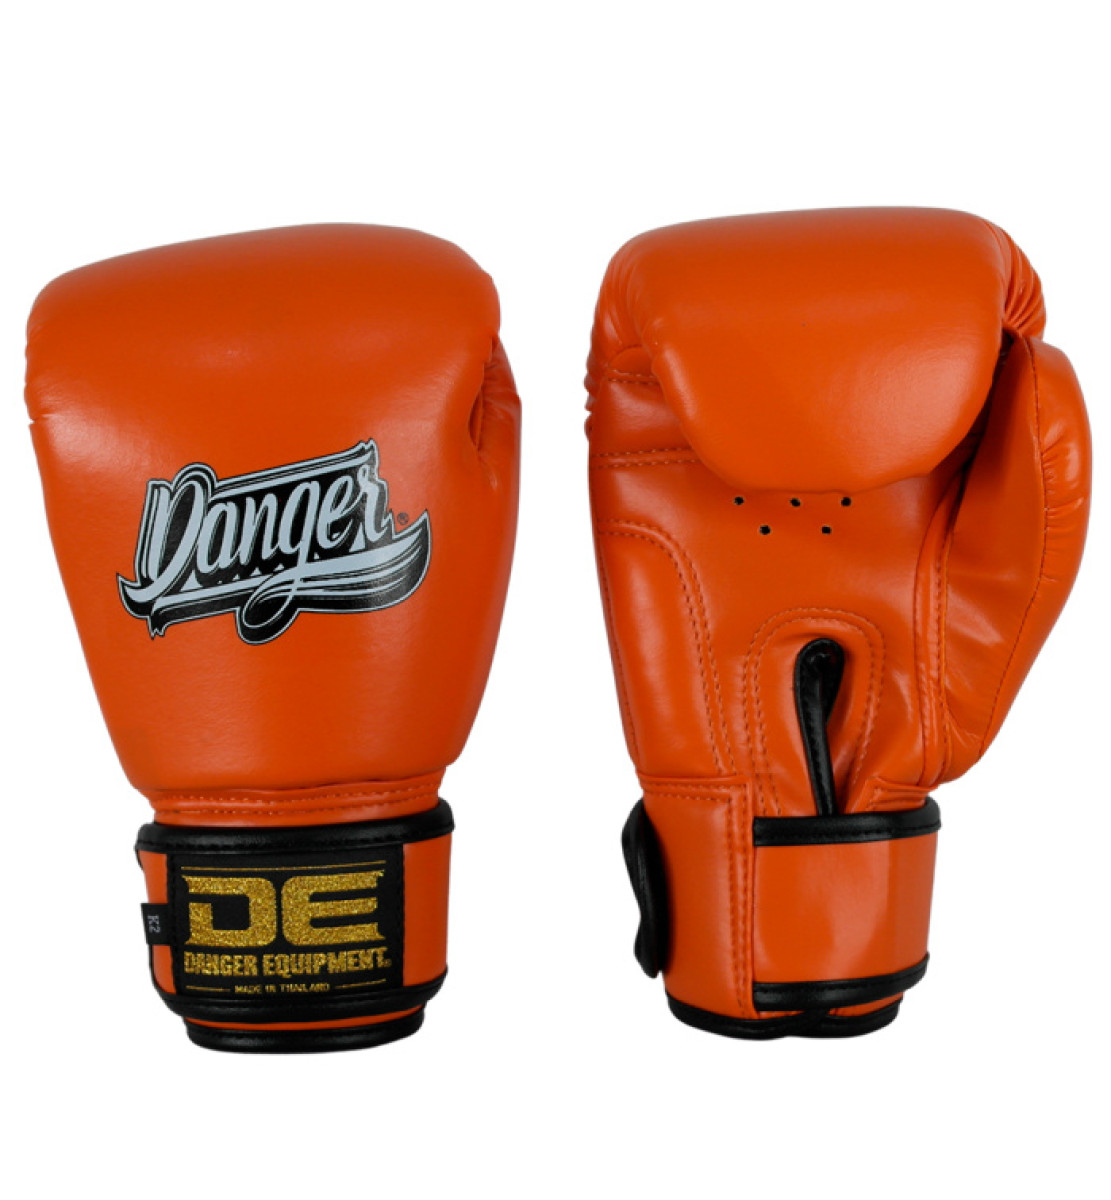 Danger Youth Boxing Gloves - Orange